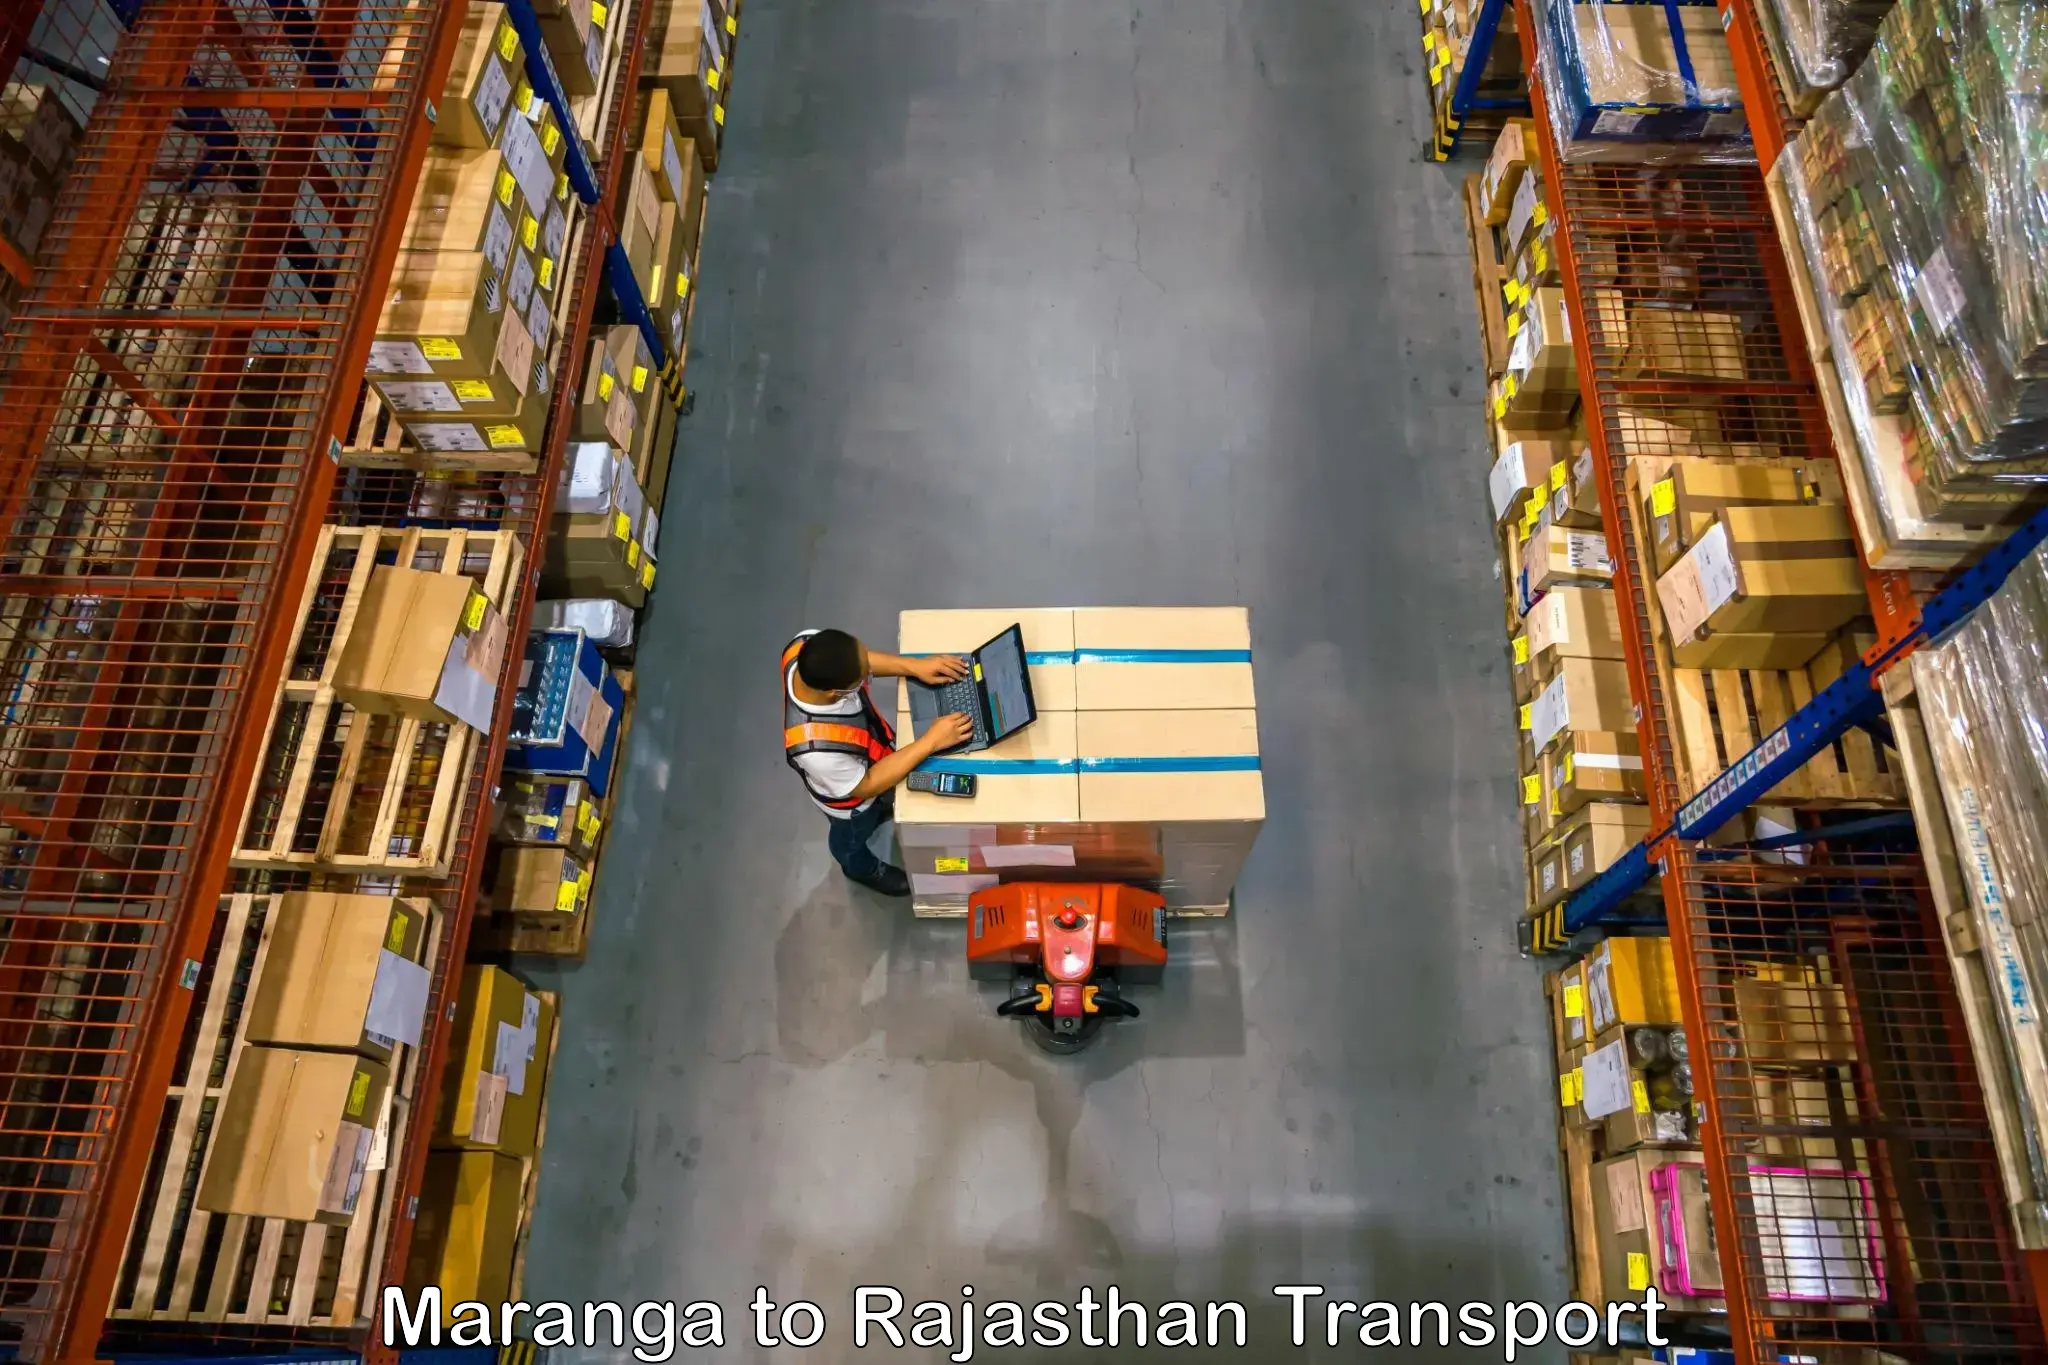 Truck transport companies in India Maranga to Bonli